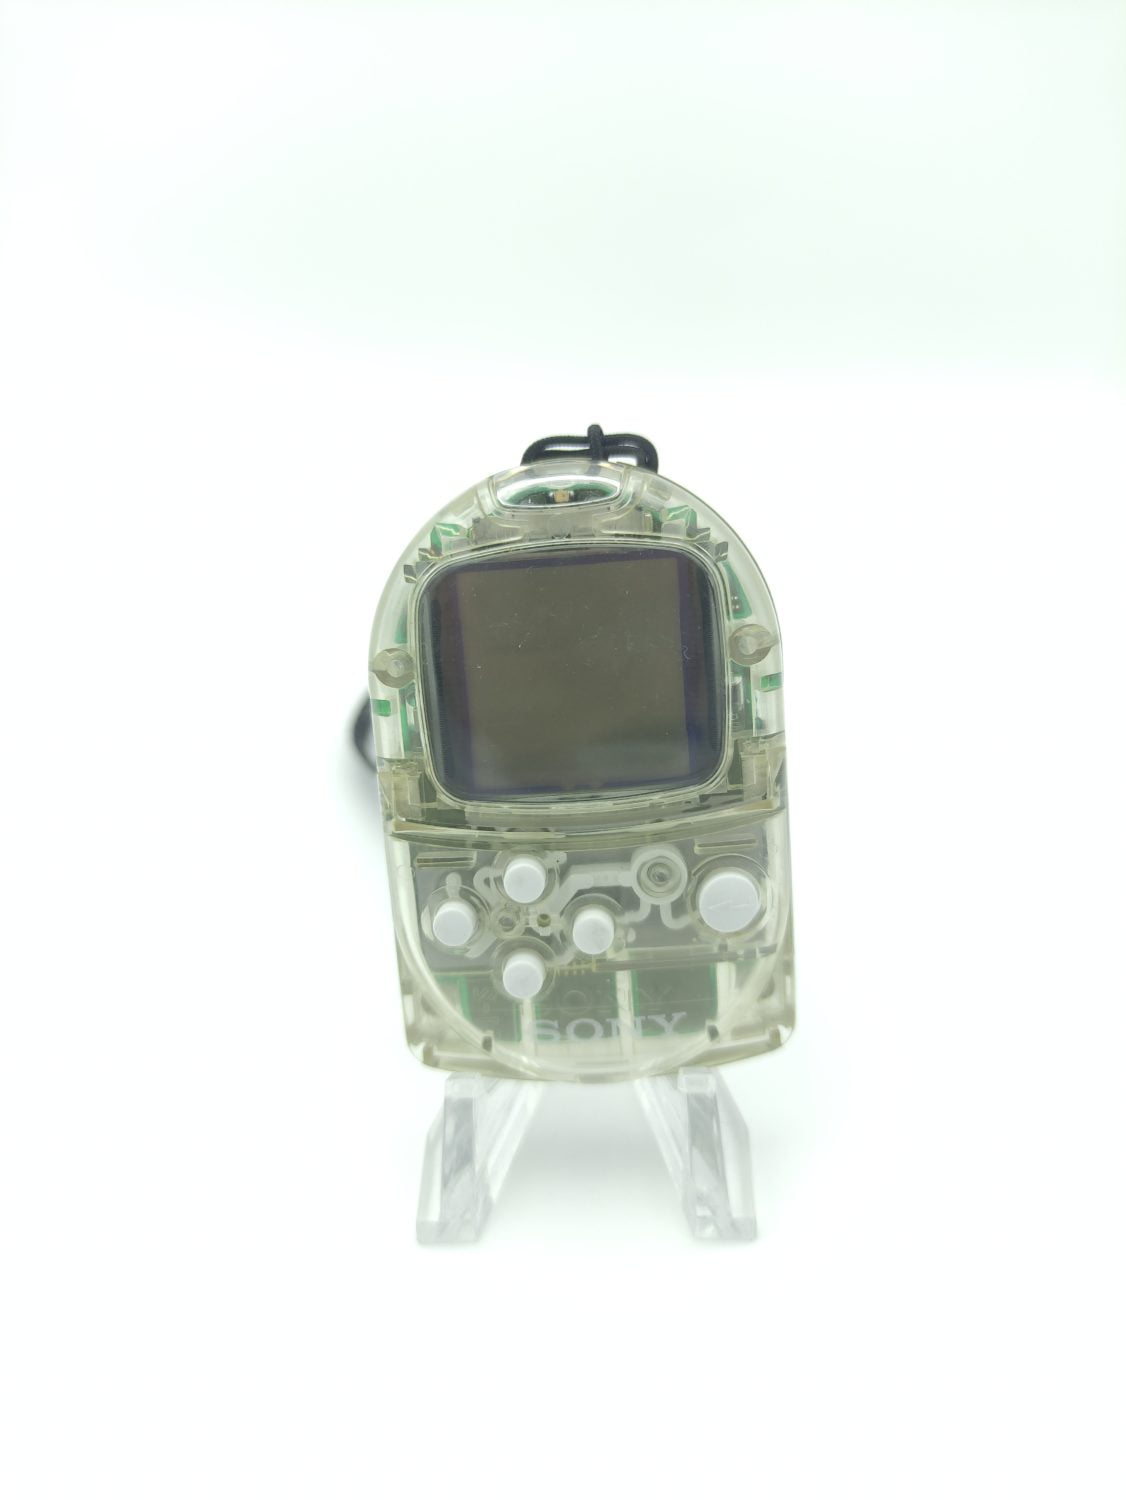 Sony Pocket Station memory card Skeleton grey SCPH-4000 Japan Boutique-Tamagotchis